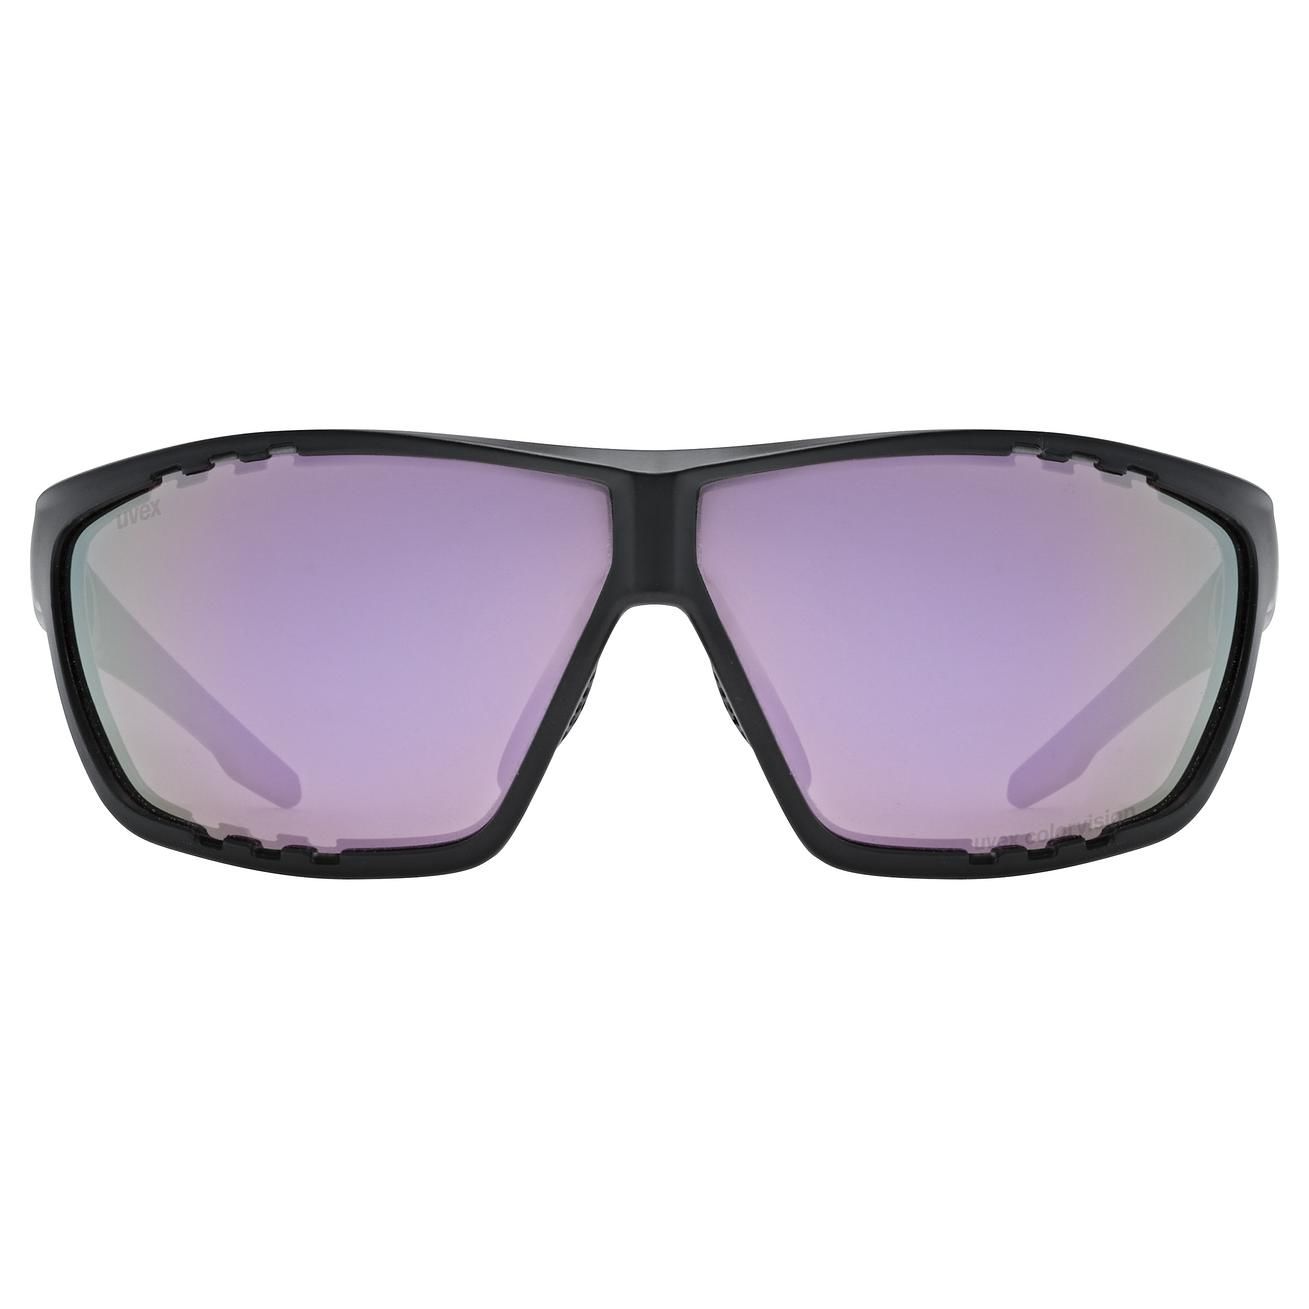 slnečné okuliare uvex sportstyle 706 CV black matt/lavender